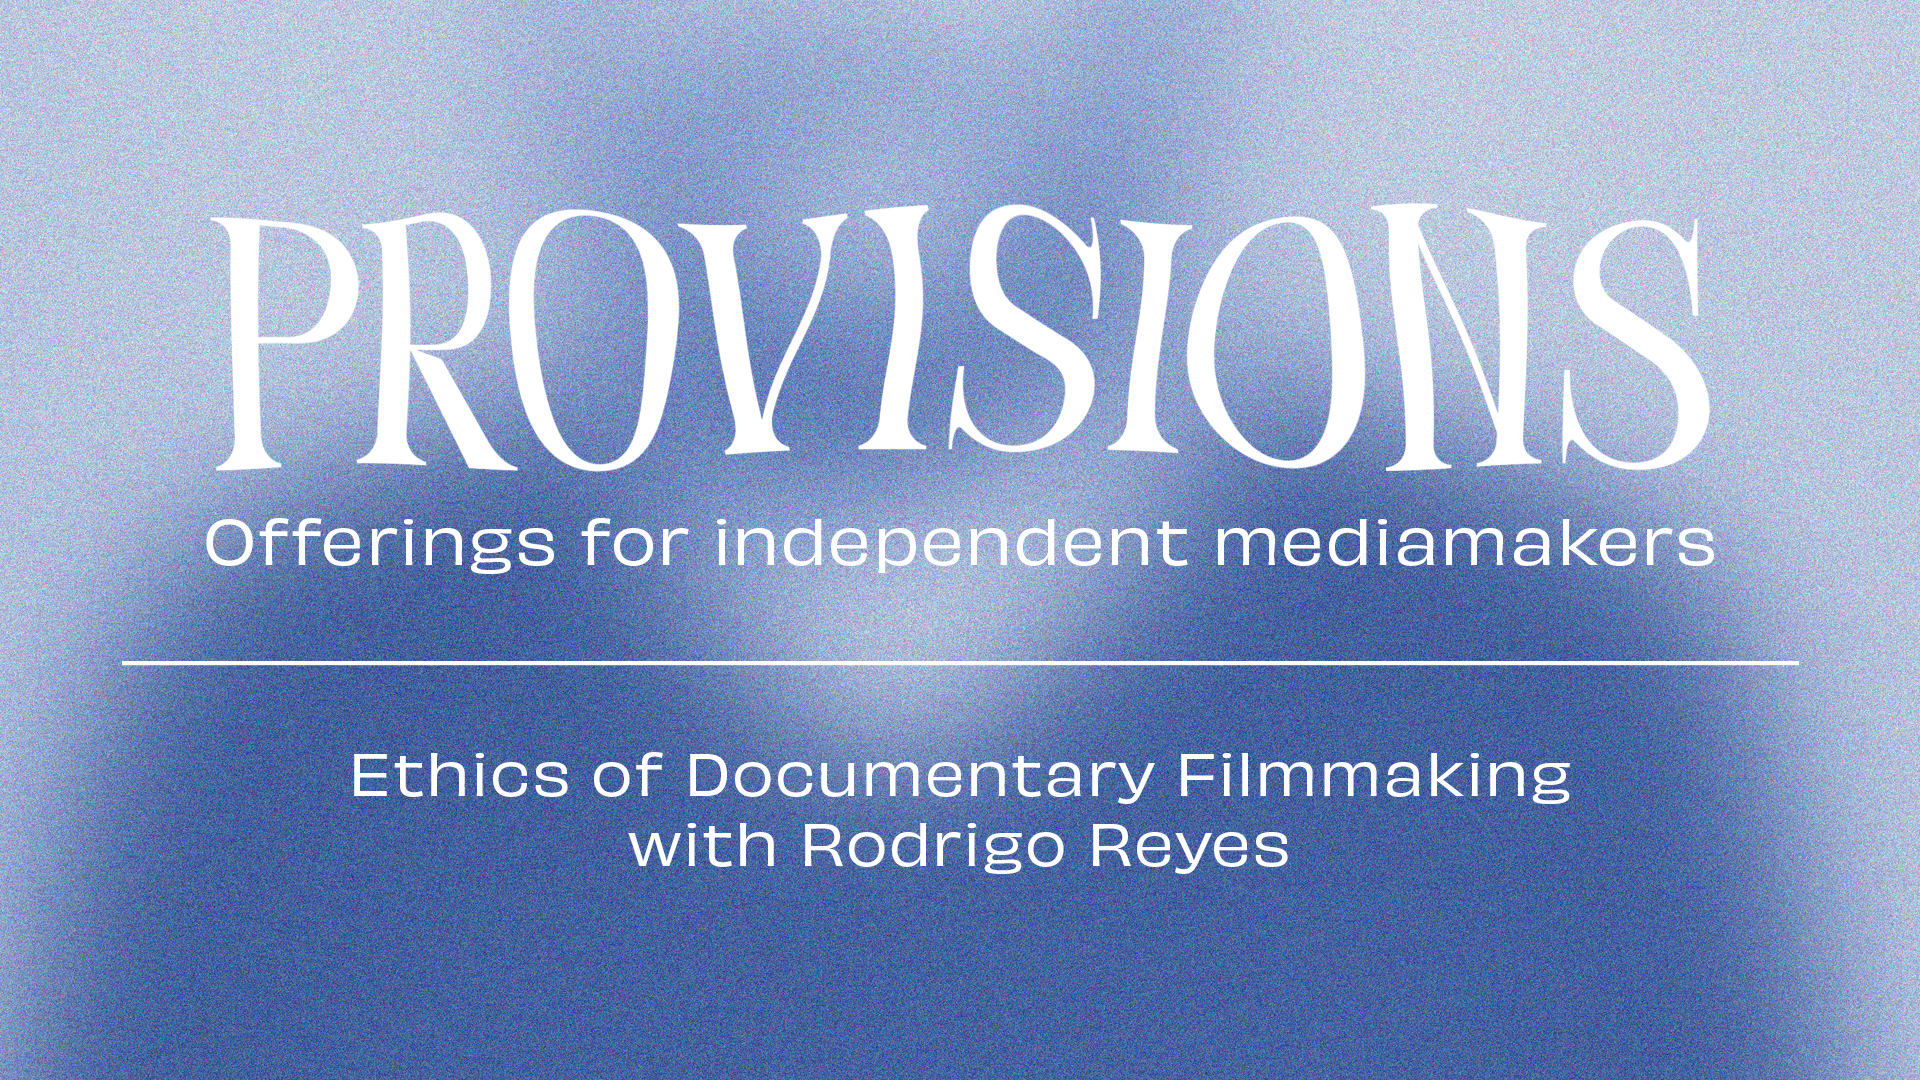 provisions-rodrigo-reyes-sanson-and-me-sanson-y-yo-ethics-of-documentary-filmmaking